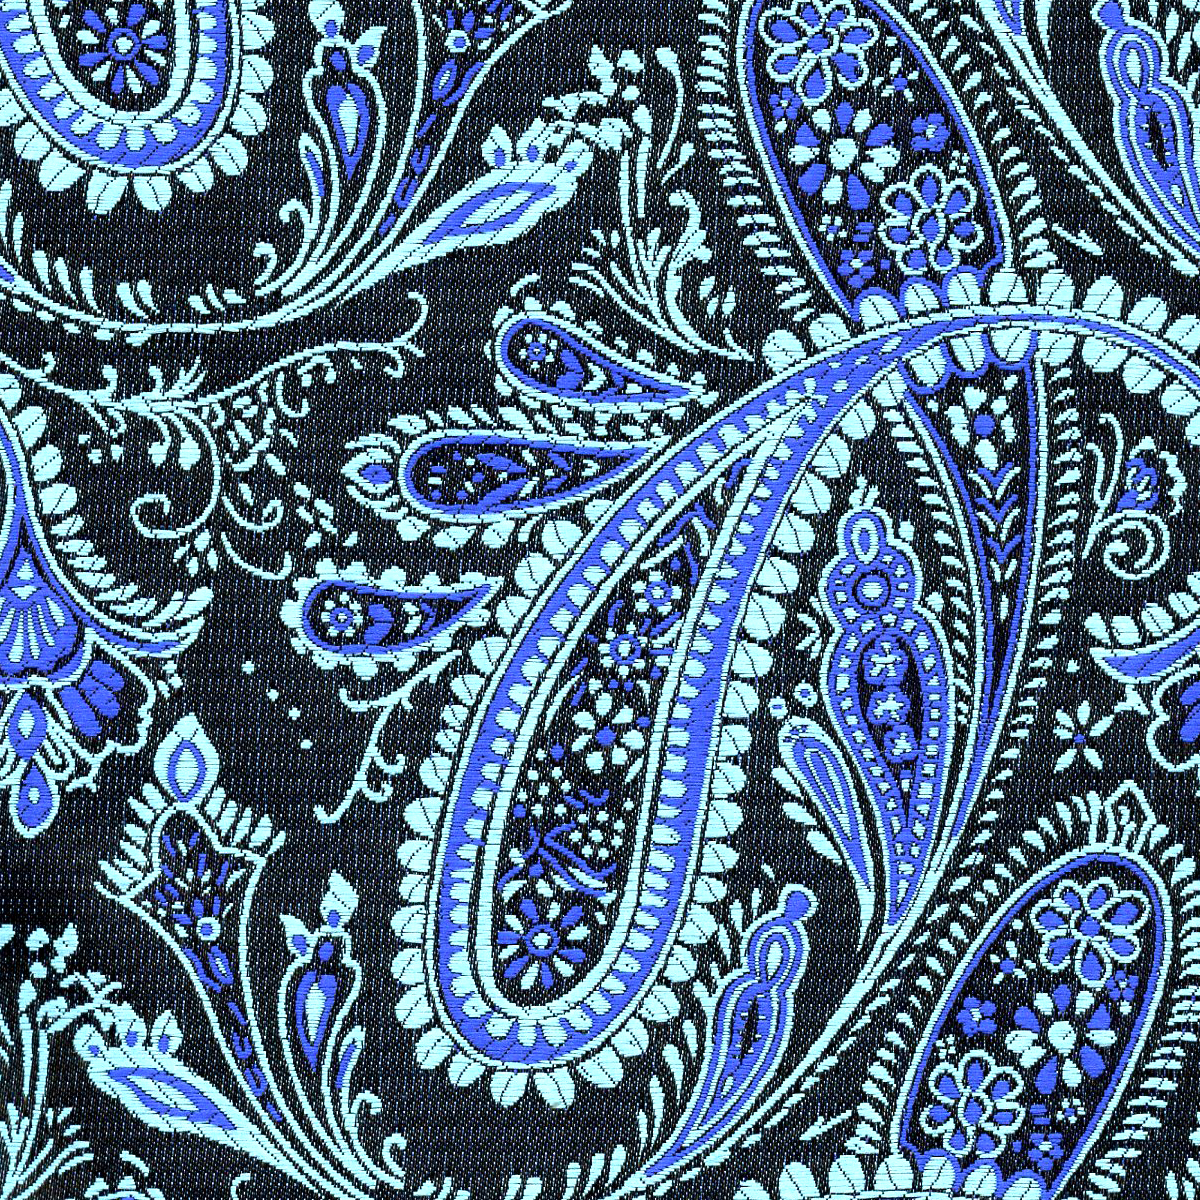 Fabric Polyester Jacquard; EU2113-004 Classic Paisley Blk/Royal/Teal